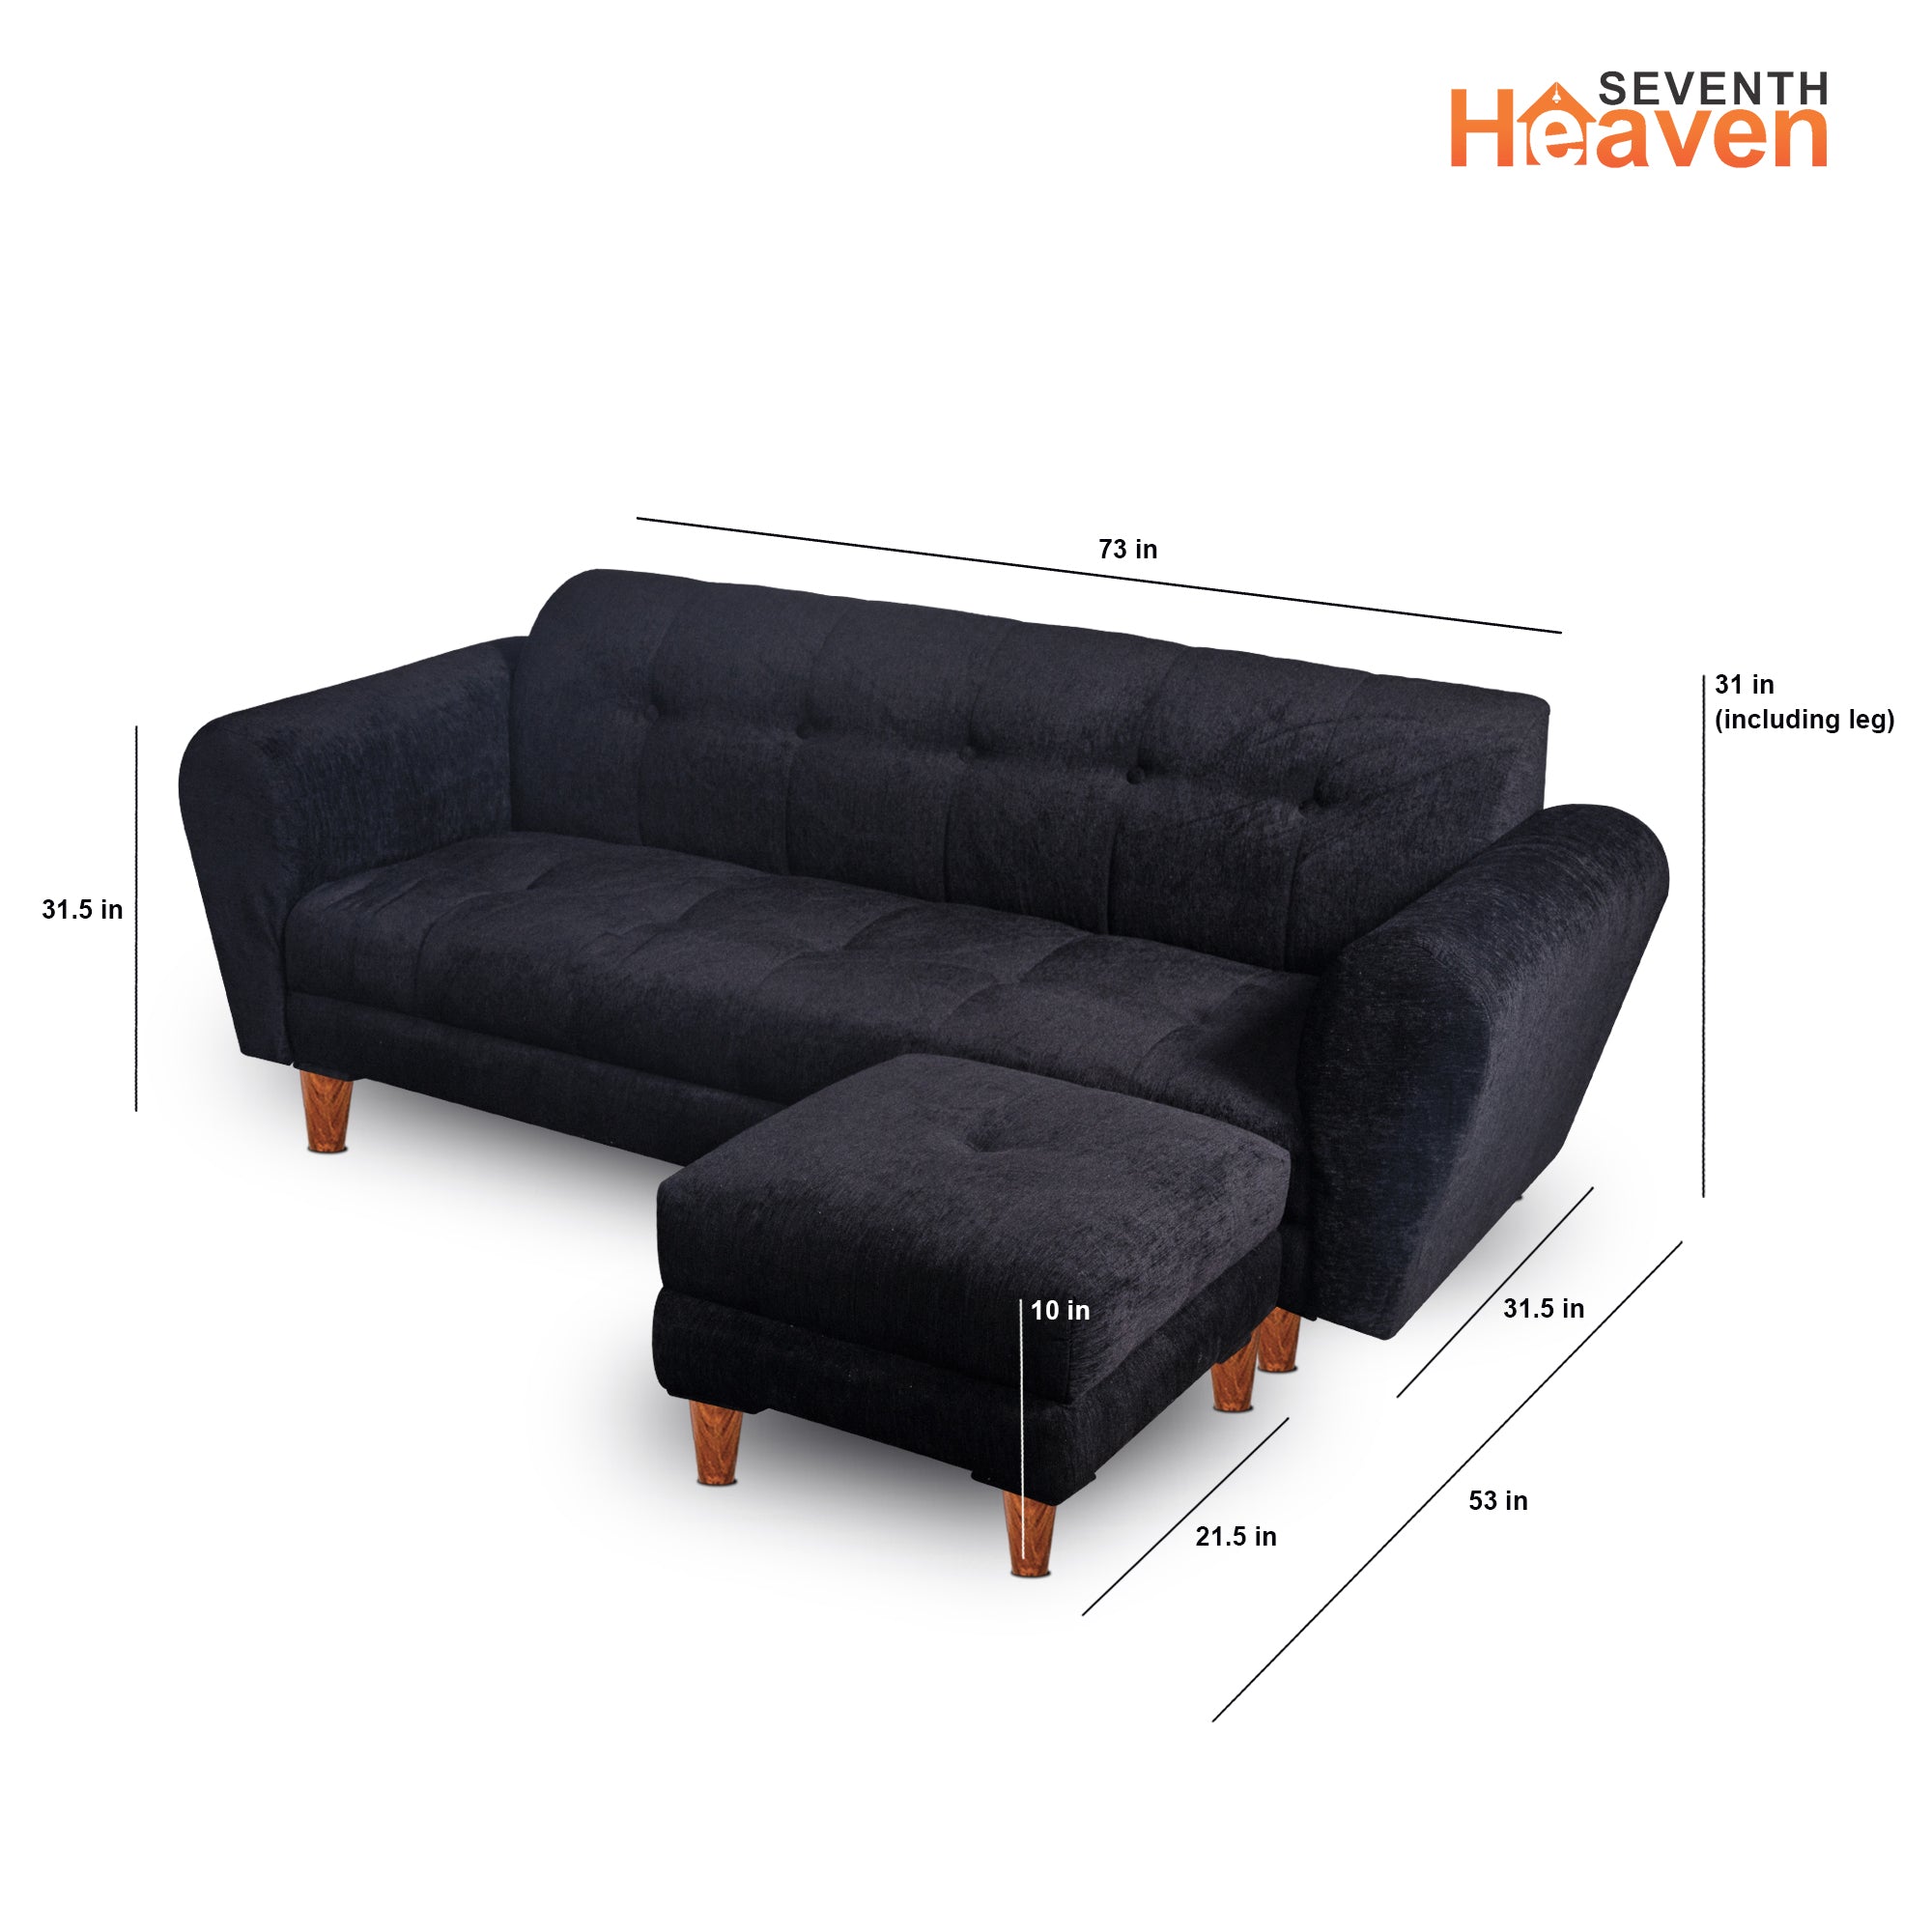 Seventh Heaven Milan 4 Seater Sofa with Ottoman, Chenille Molfino Fabric: 3 Year Warranty Fabric 4 Seater Sofa  (Finish Color - Black, DIY(Do-It-Yourself))